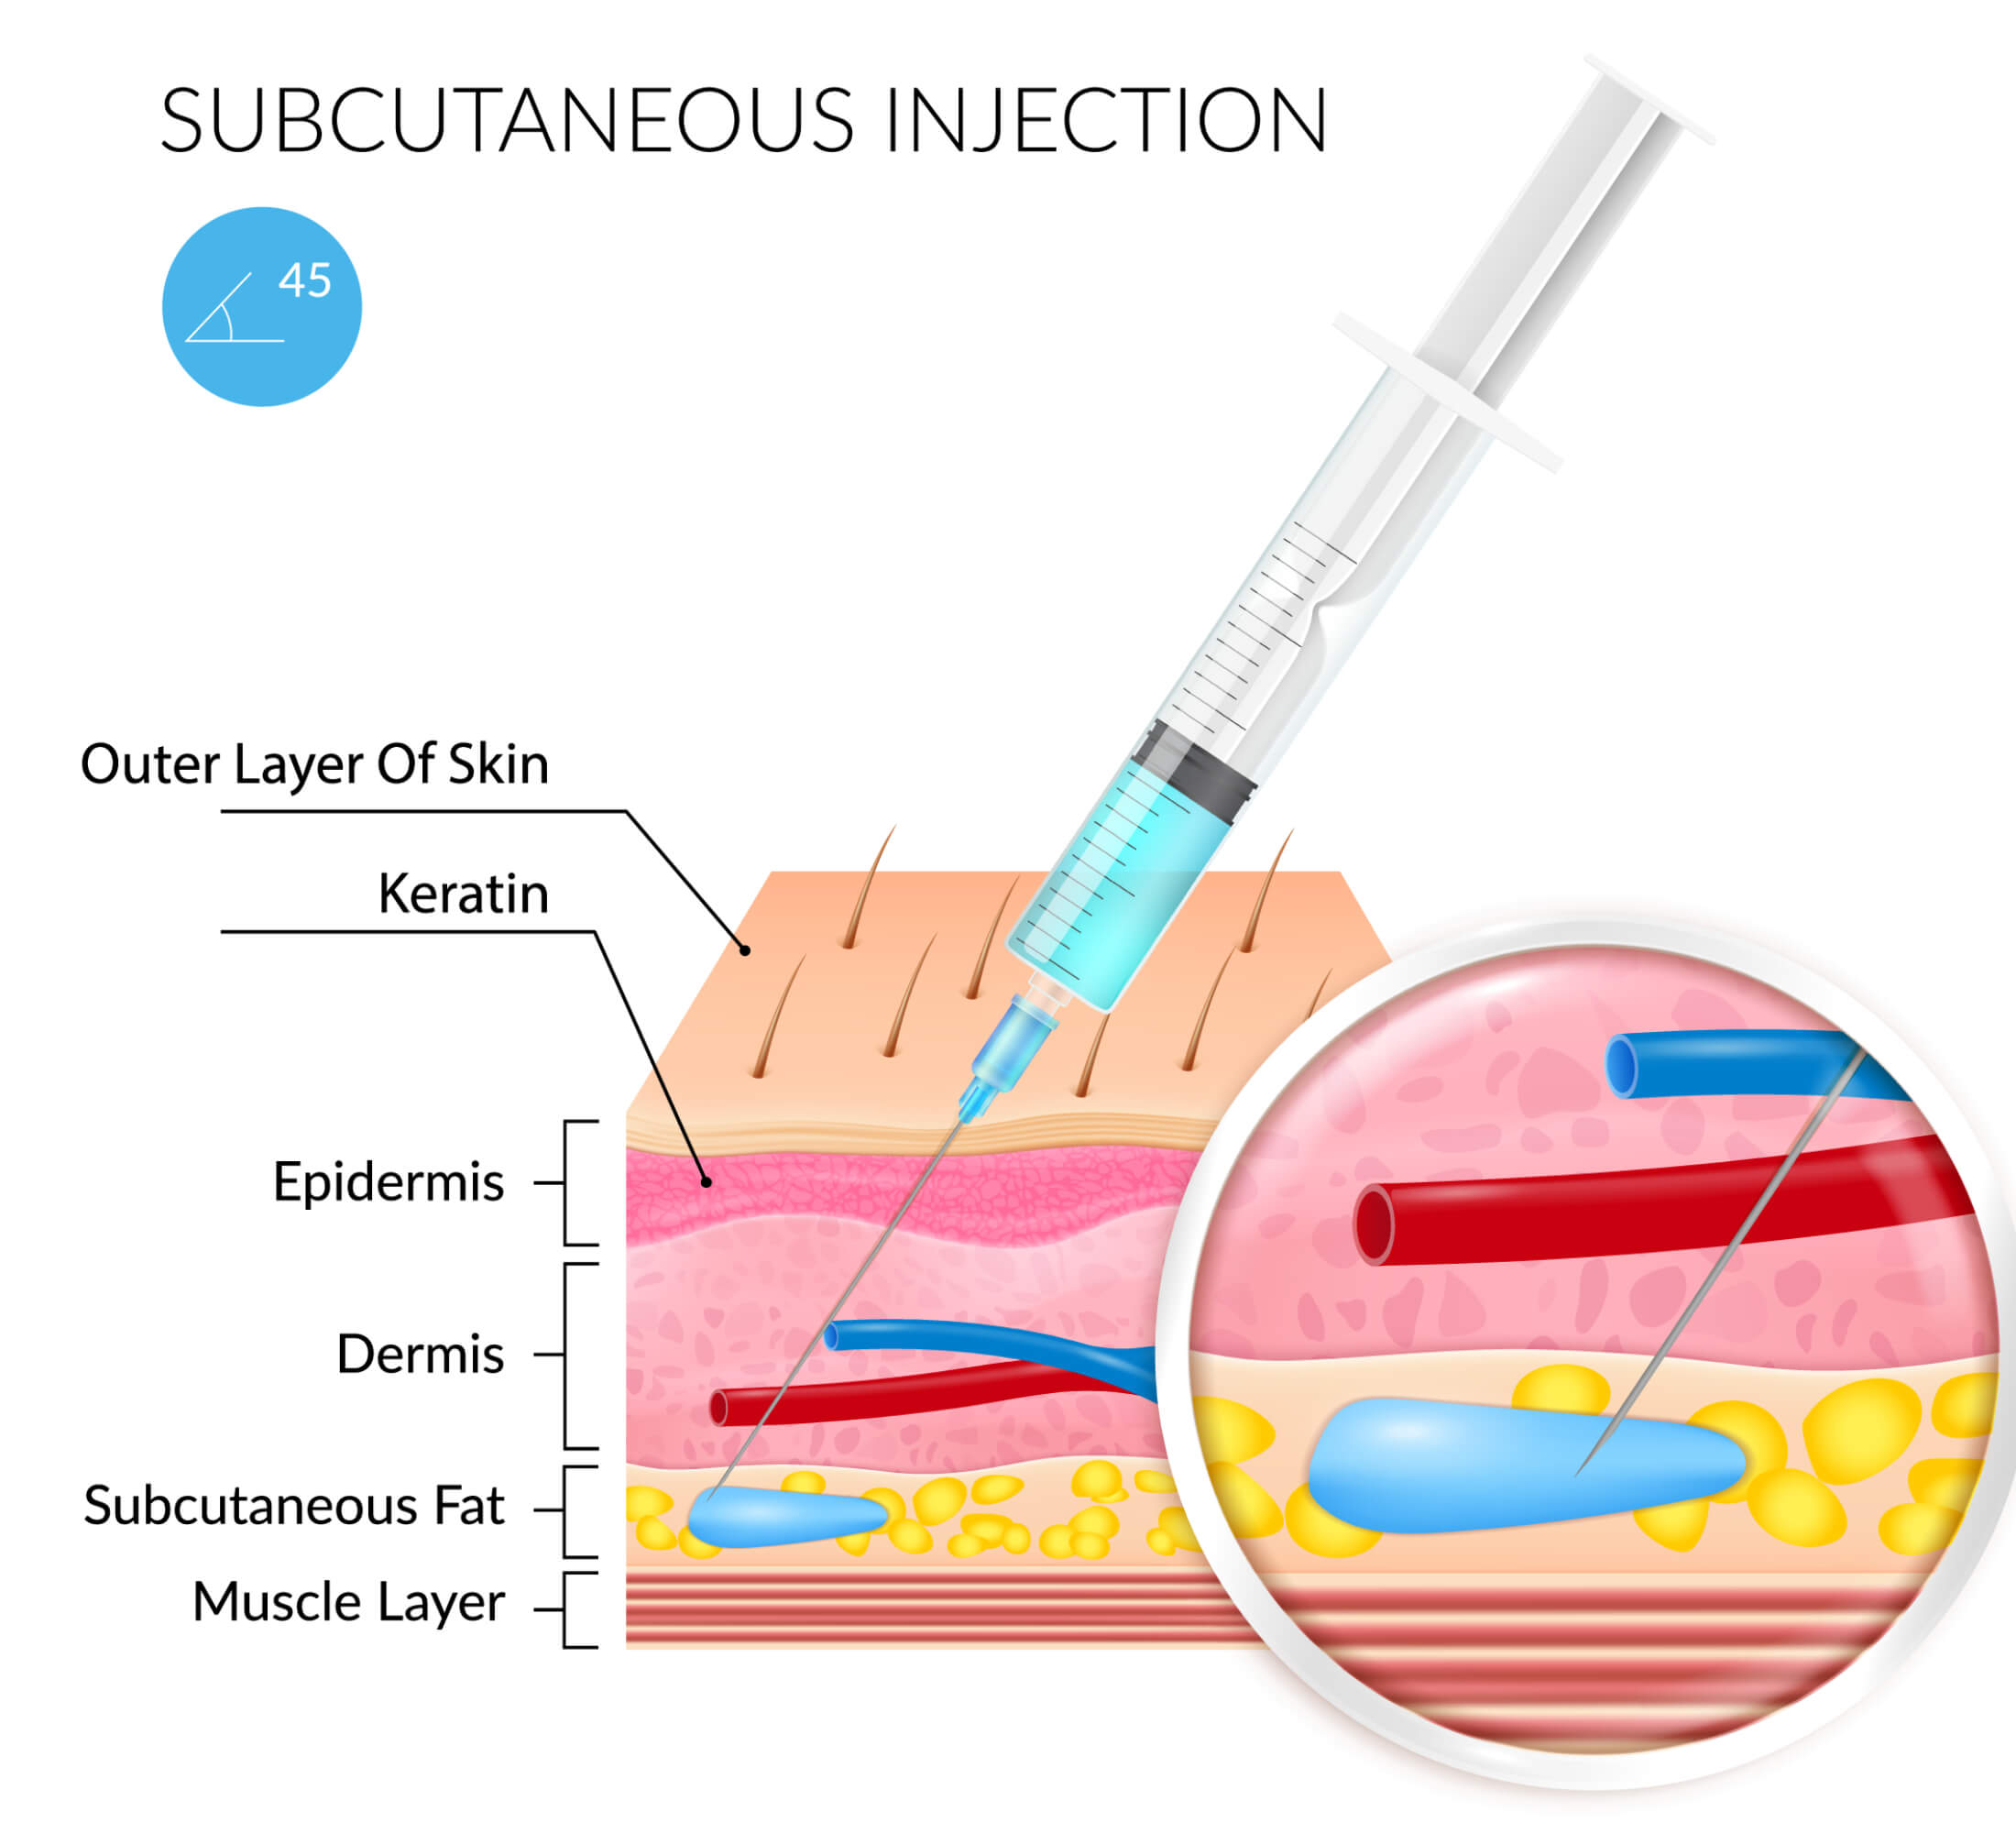 Subcutaneous immunoglobulin injection